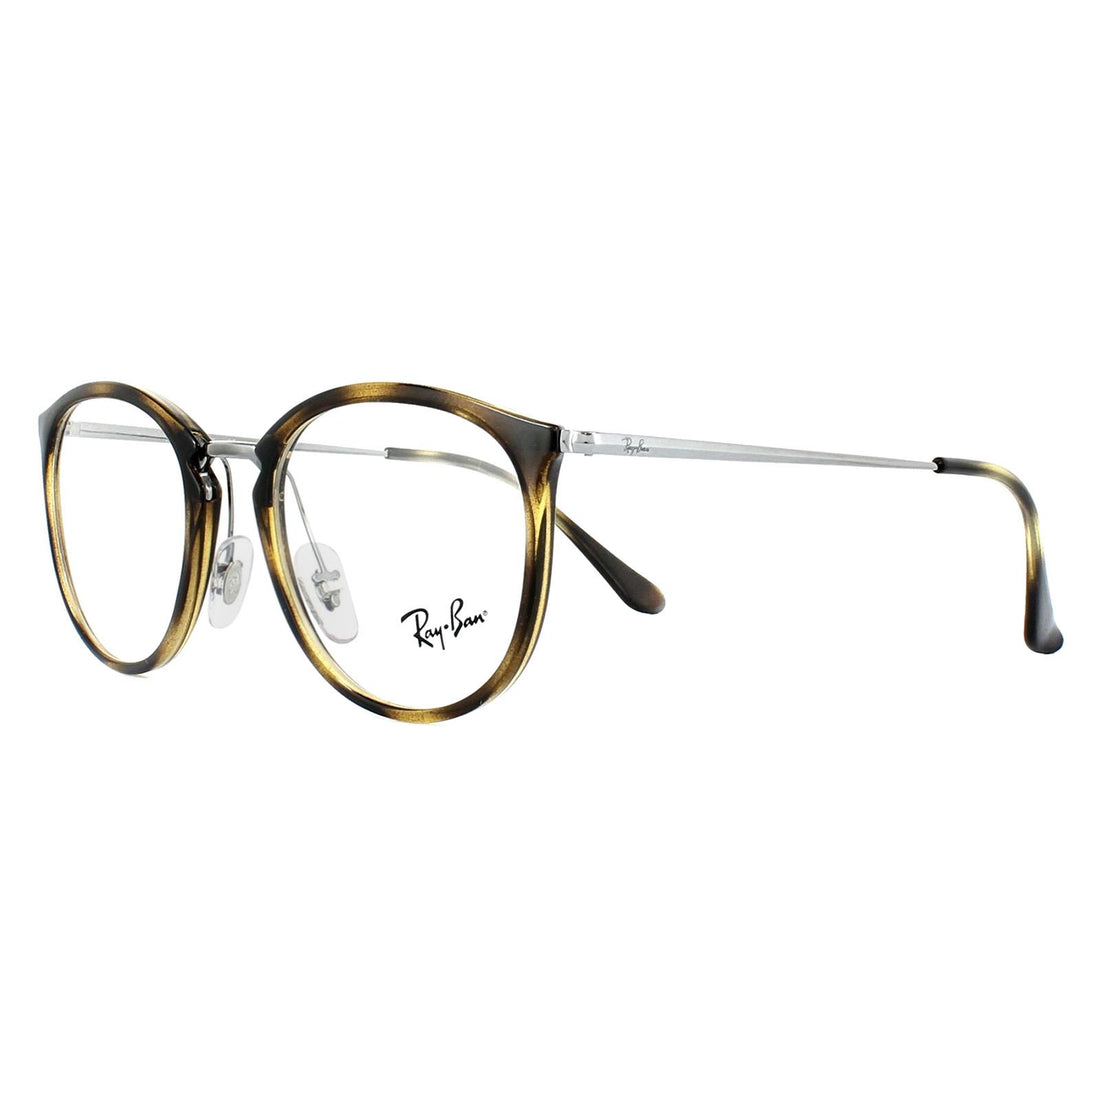 Ray-Ban Glasses Frames RX7140 2012 Havana 51mm